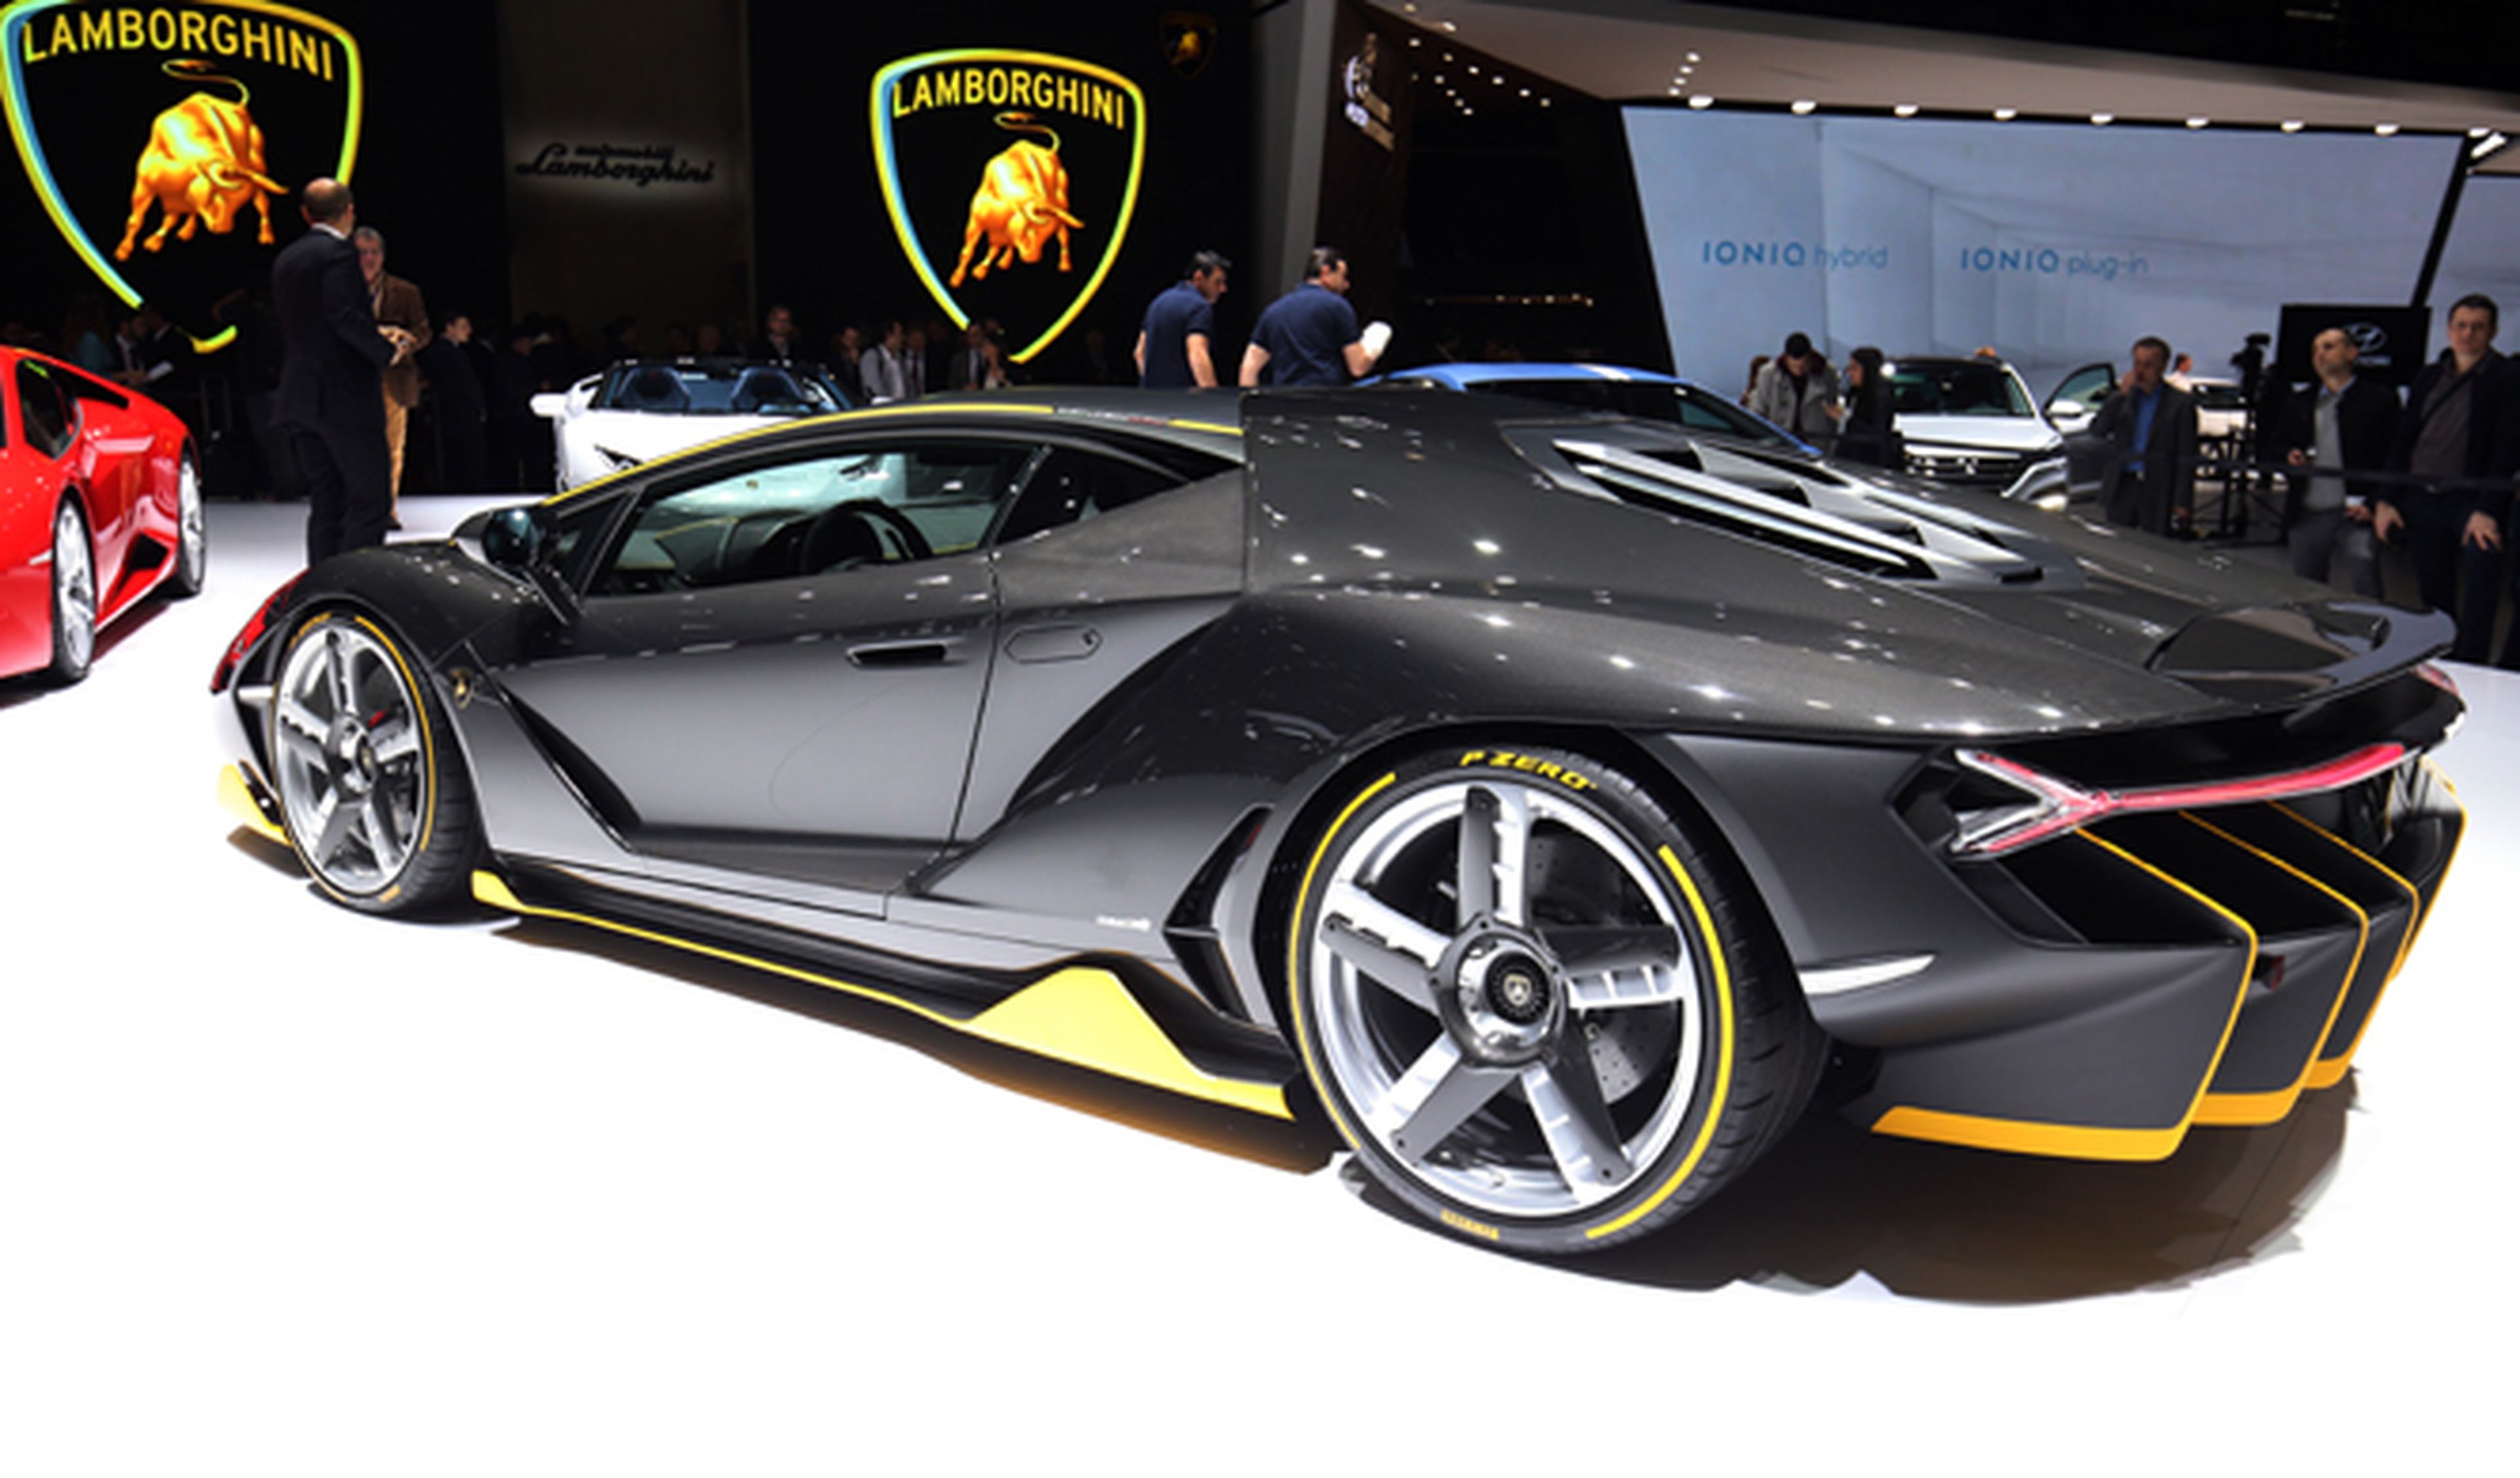 Los planes de futuro de Lamborghini, ojo a una berlina...